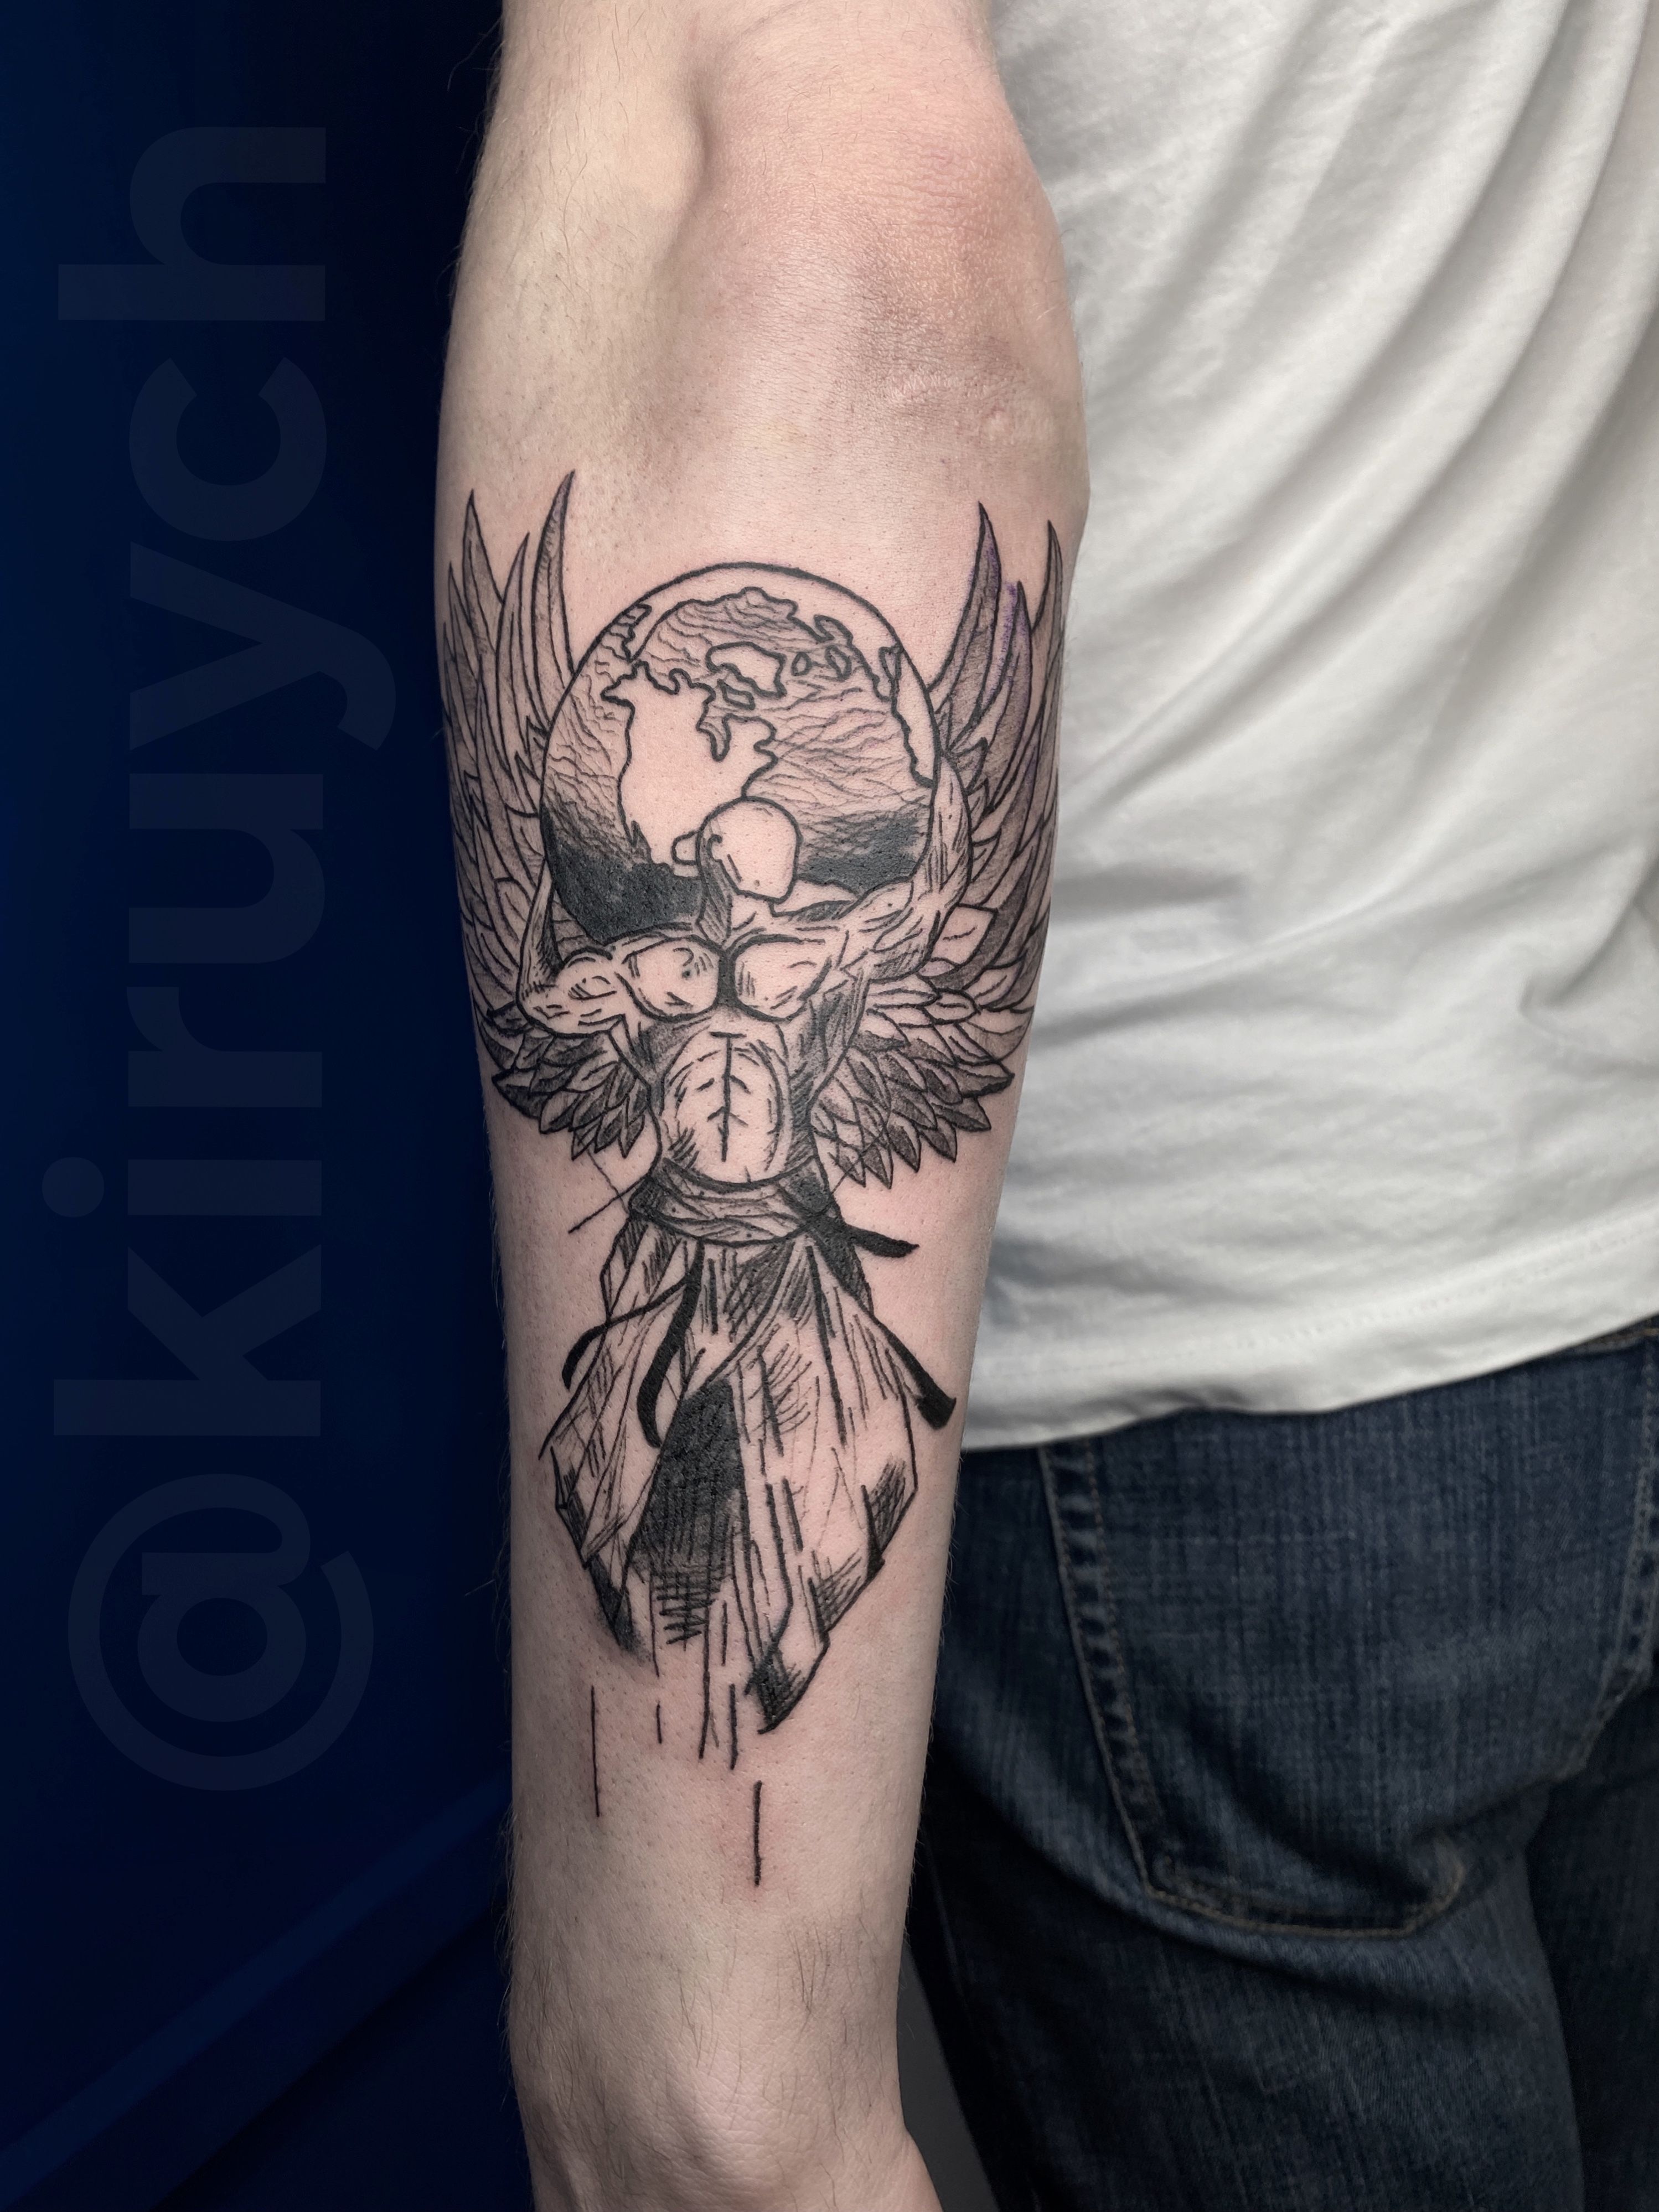 Tattoo uploaded by Kir • Atlas Shrugged illustration outer forearm • Tattoodo